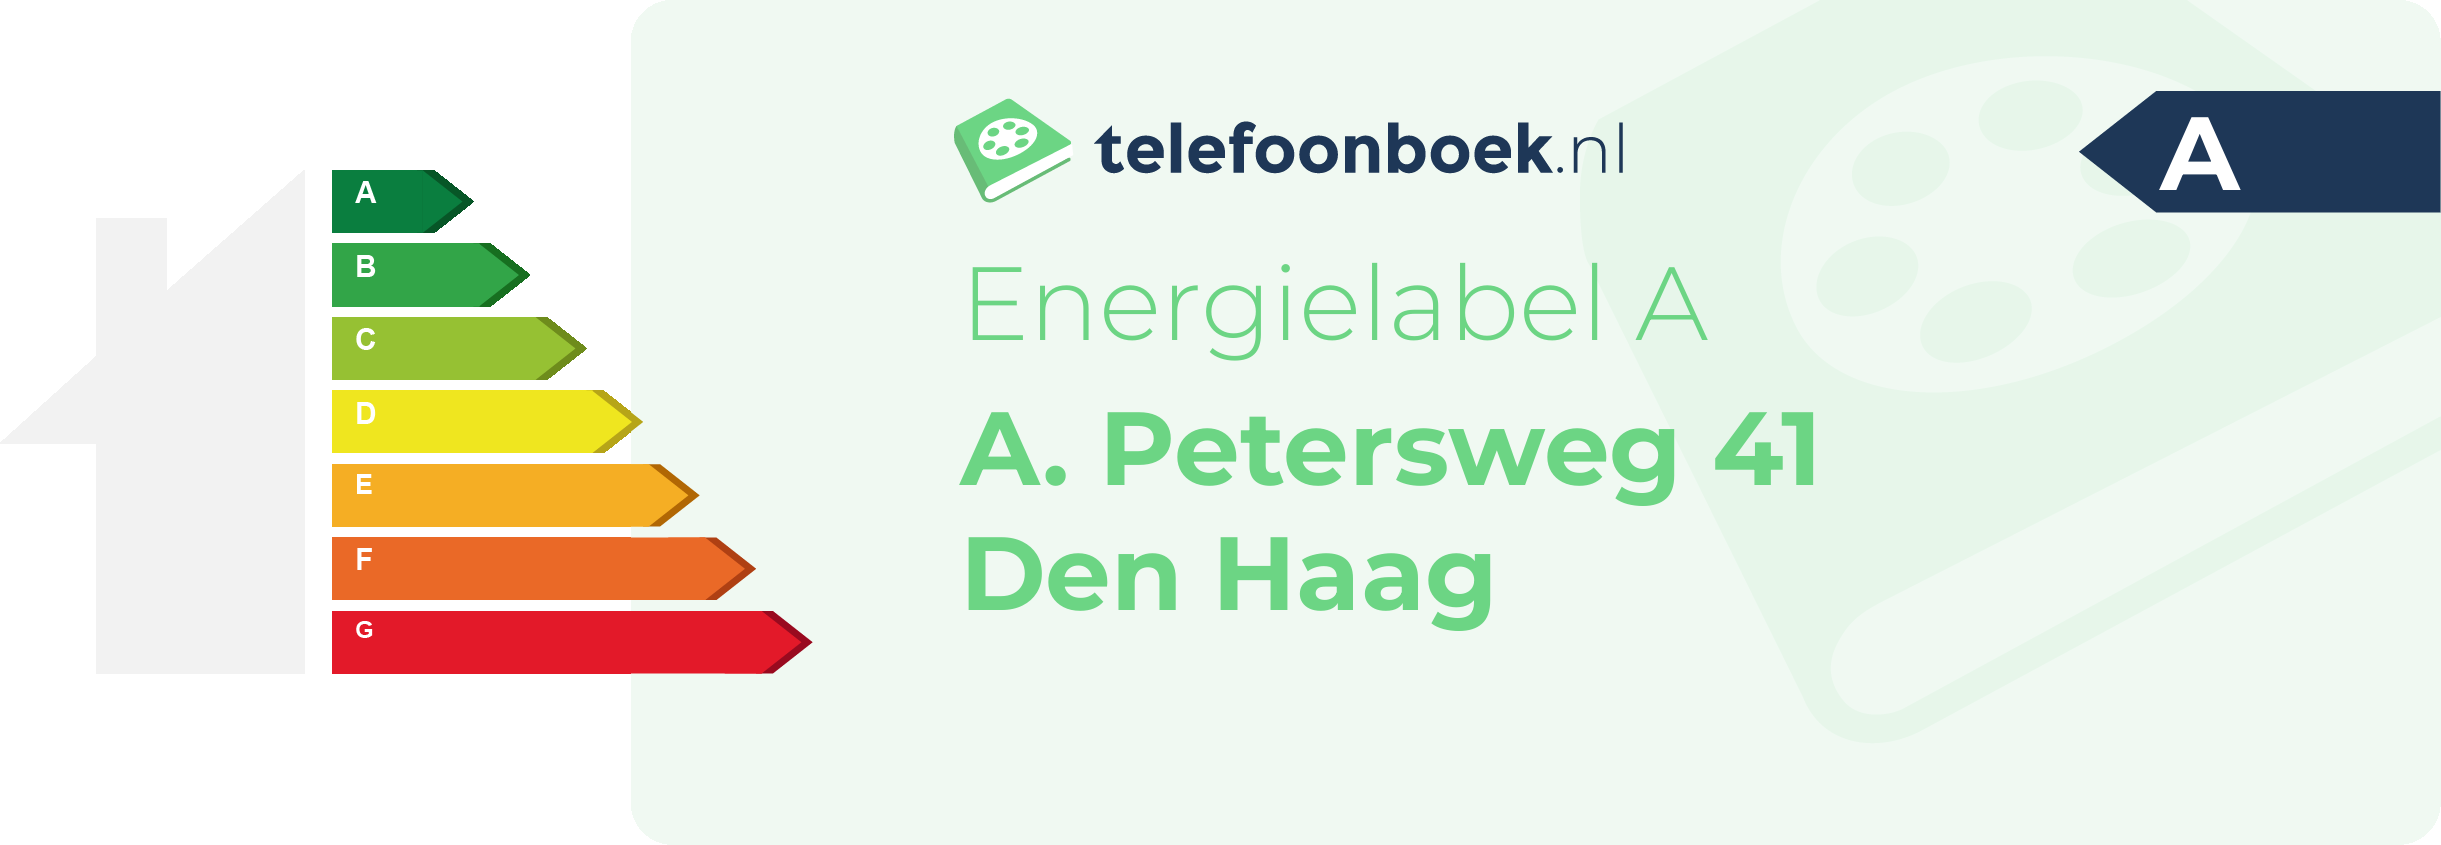 Energielabel A. Petersweg 41 Den Haag